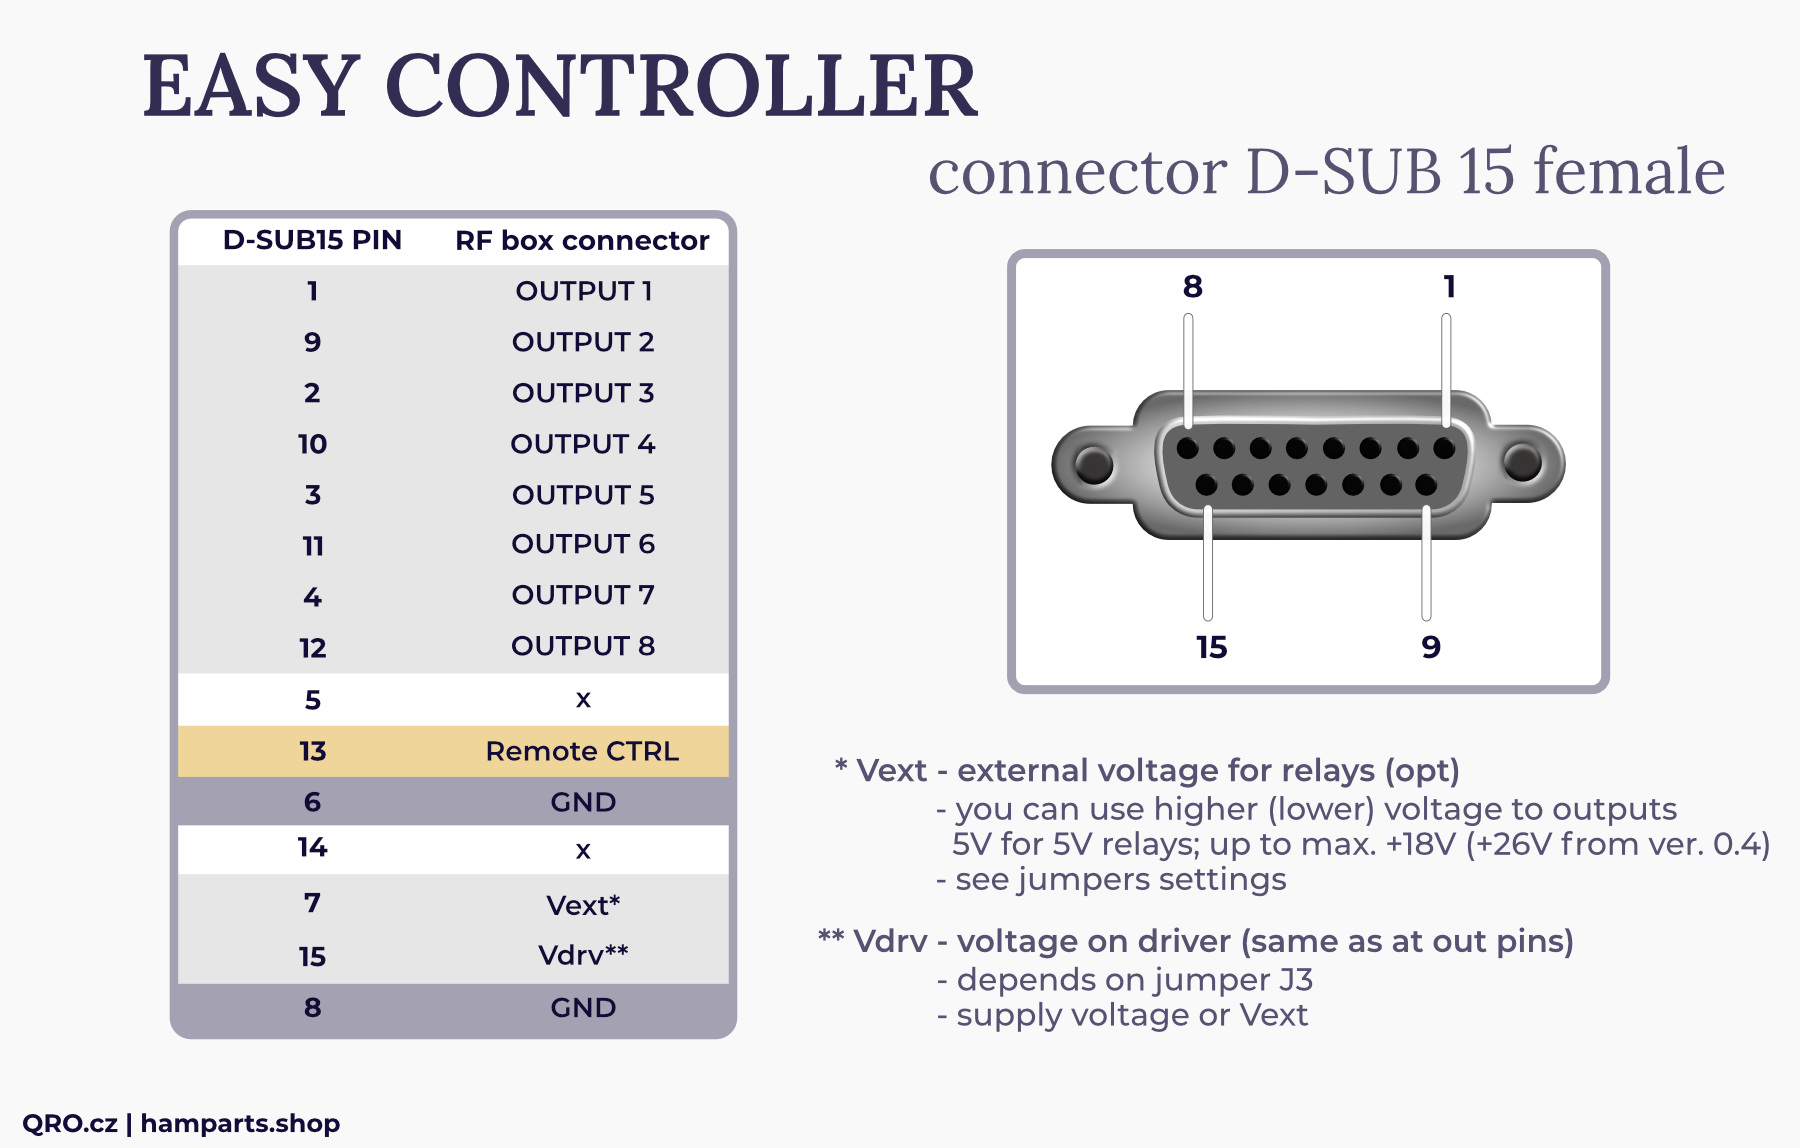 easy controller connector d-sub 15 female qro.cz hamparts.shop